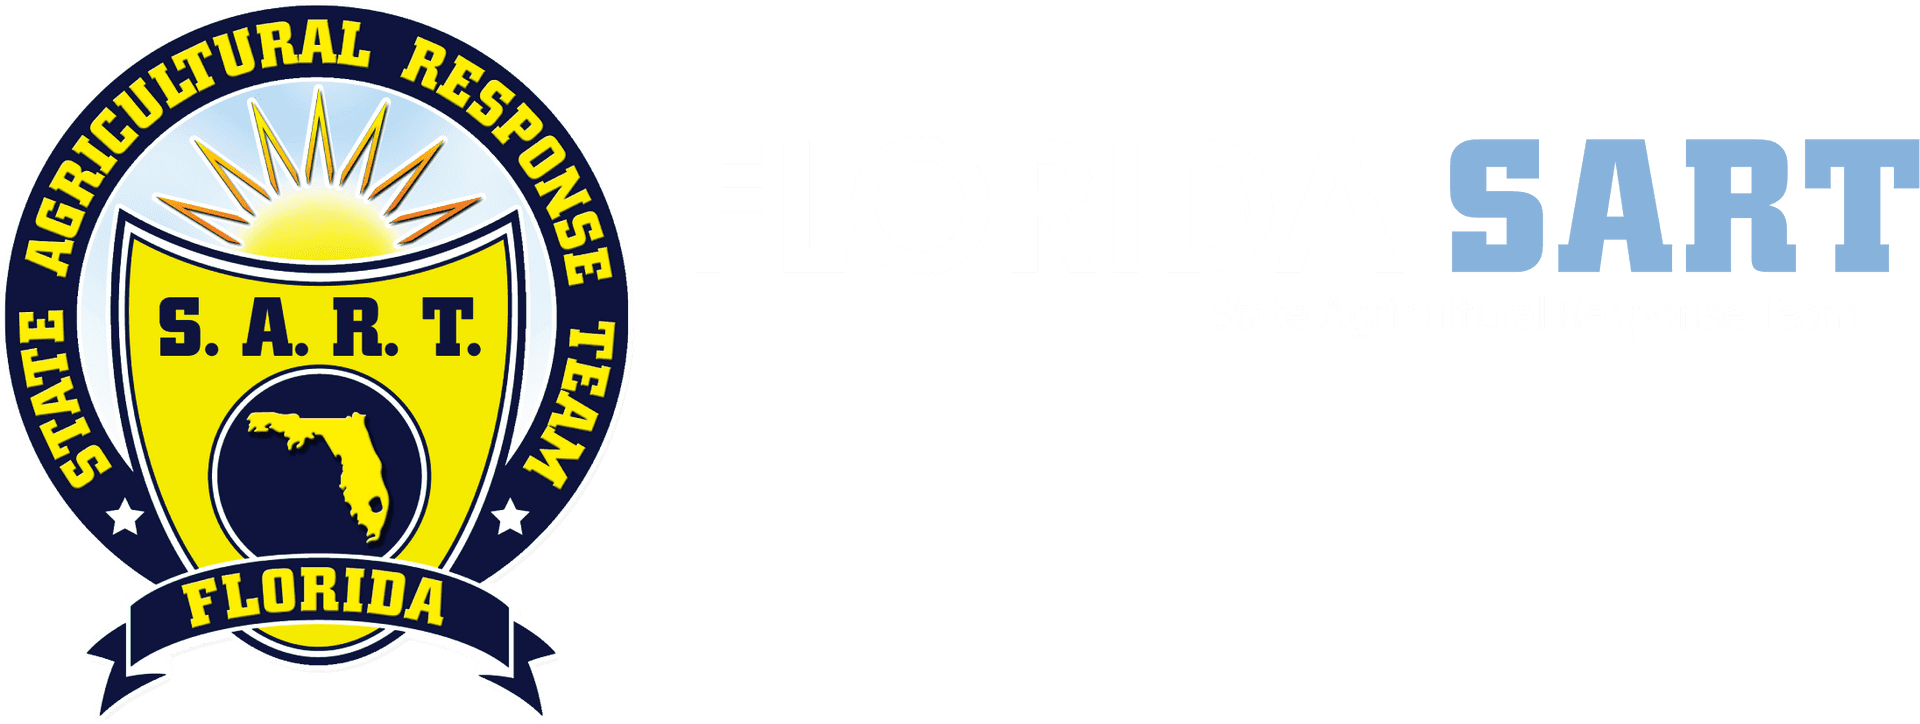 Florida S A R T Logo PNG